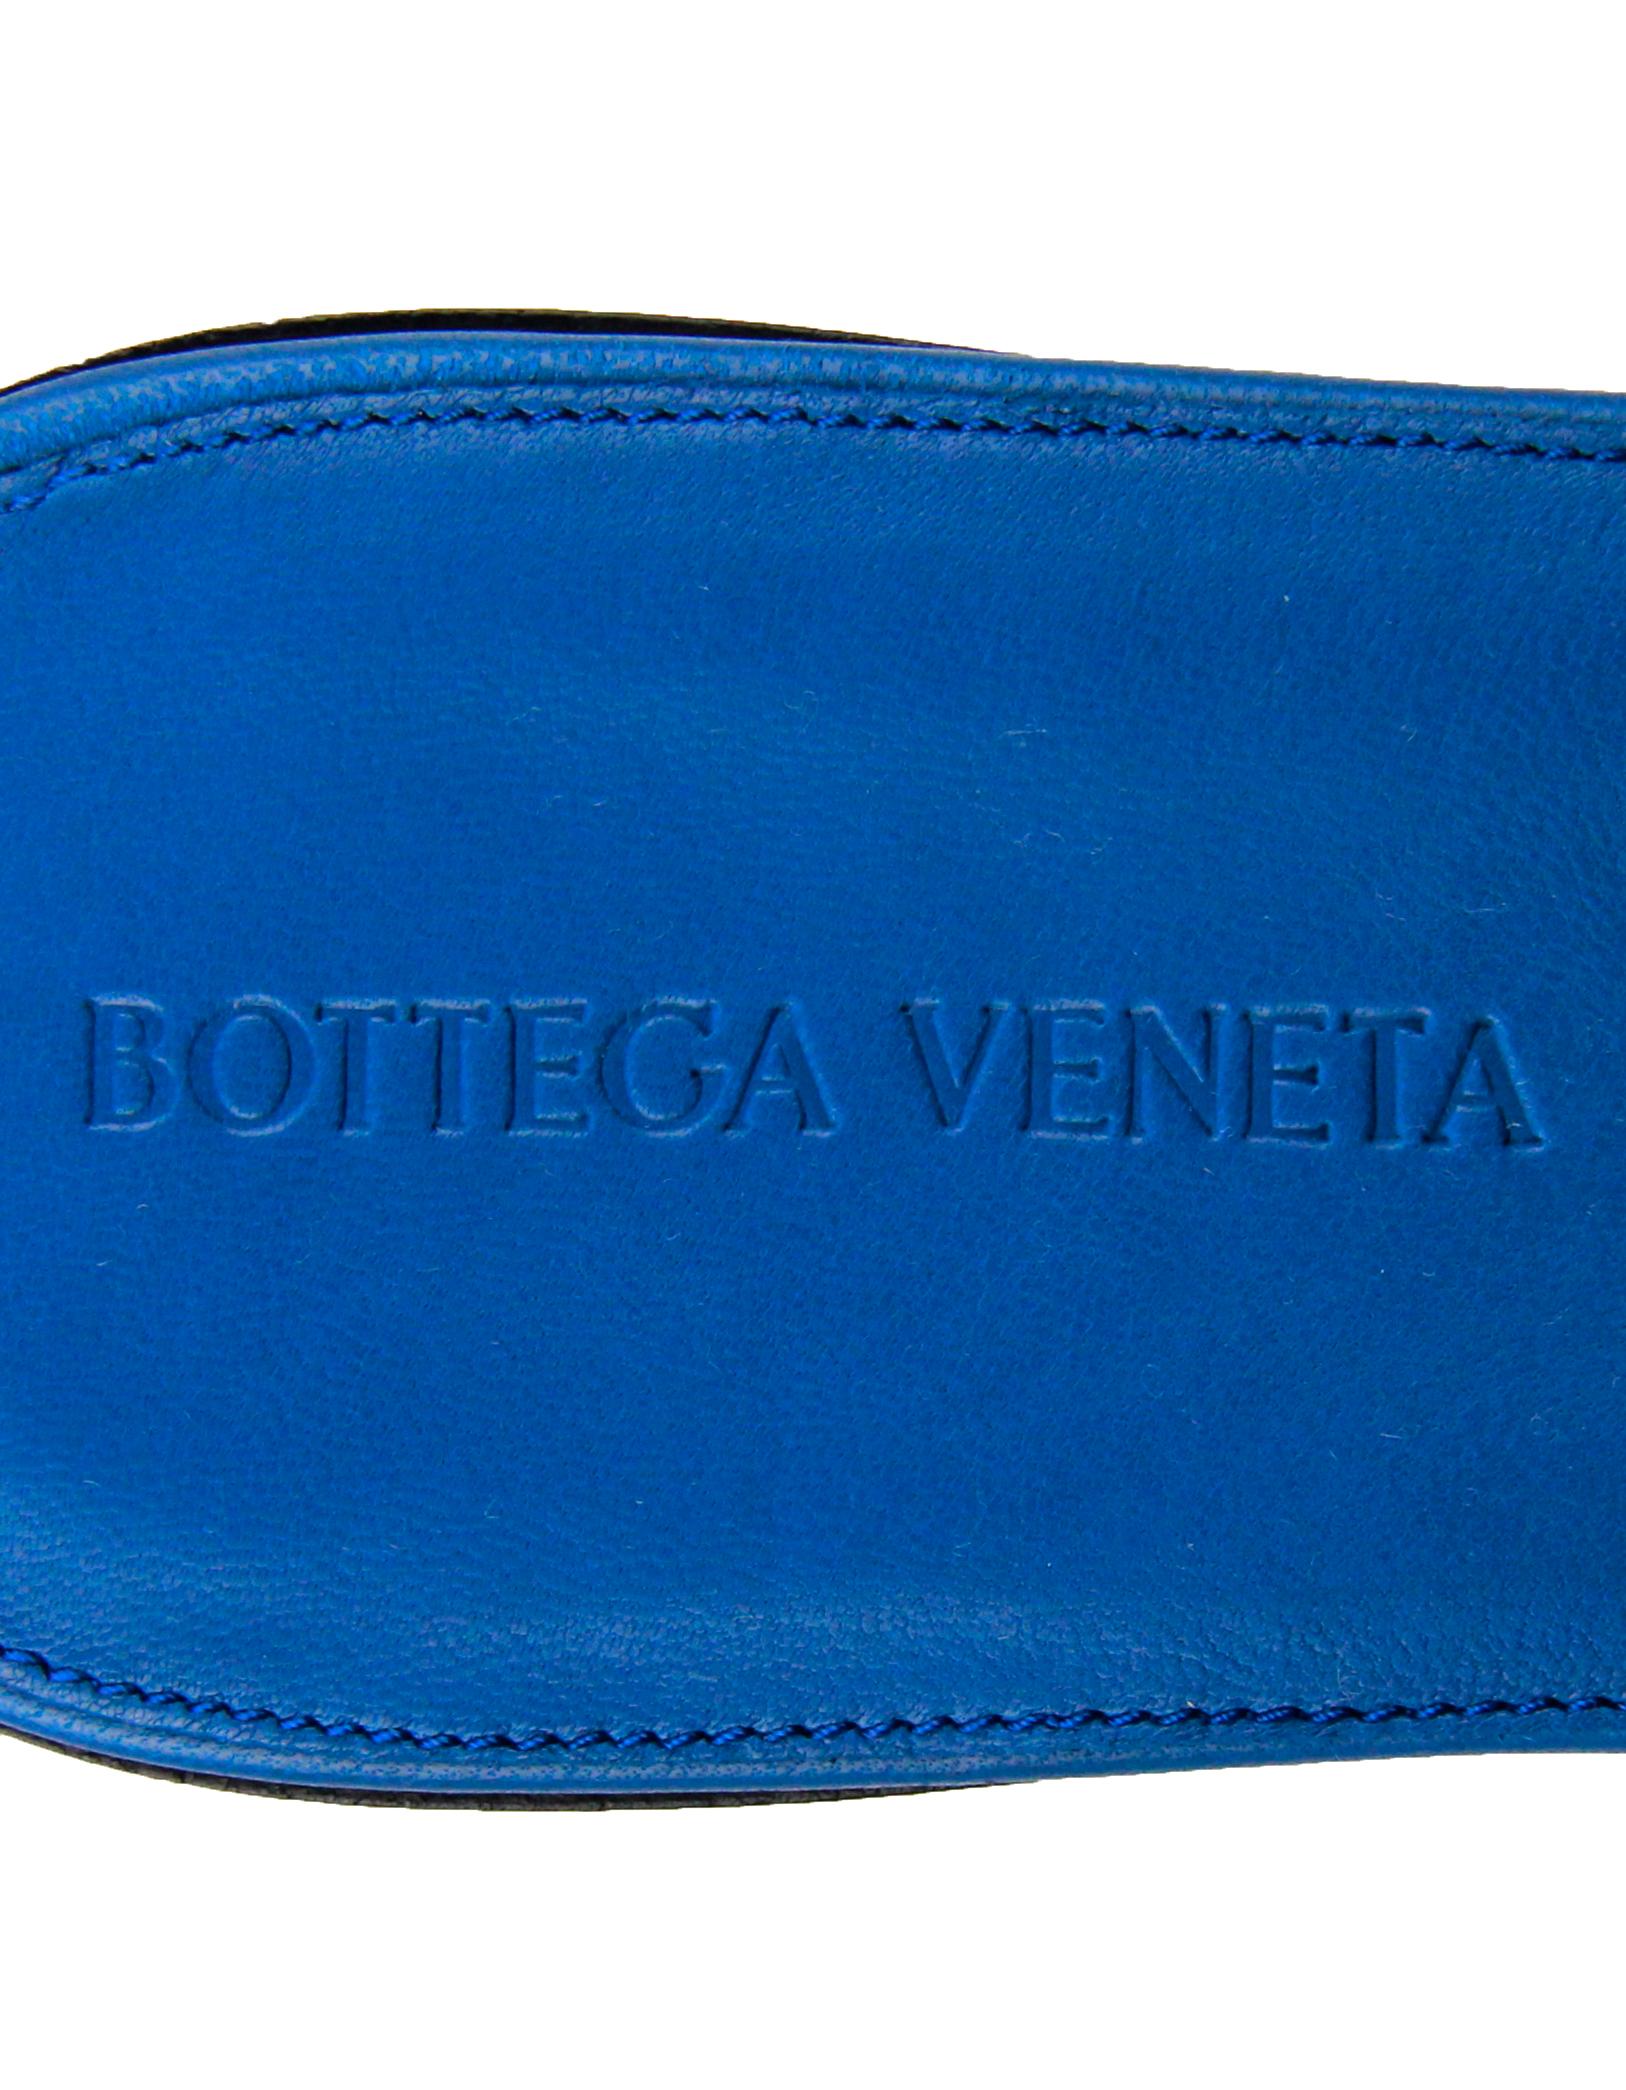 Bottega Veneta NEW Pacific Blue Leather Quilted Flat Sandals sz 39 3